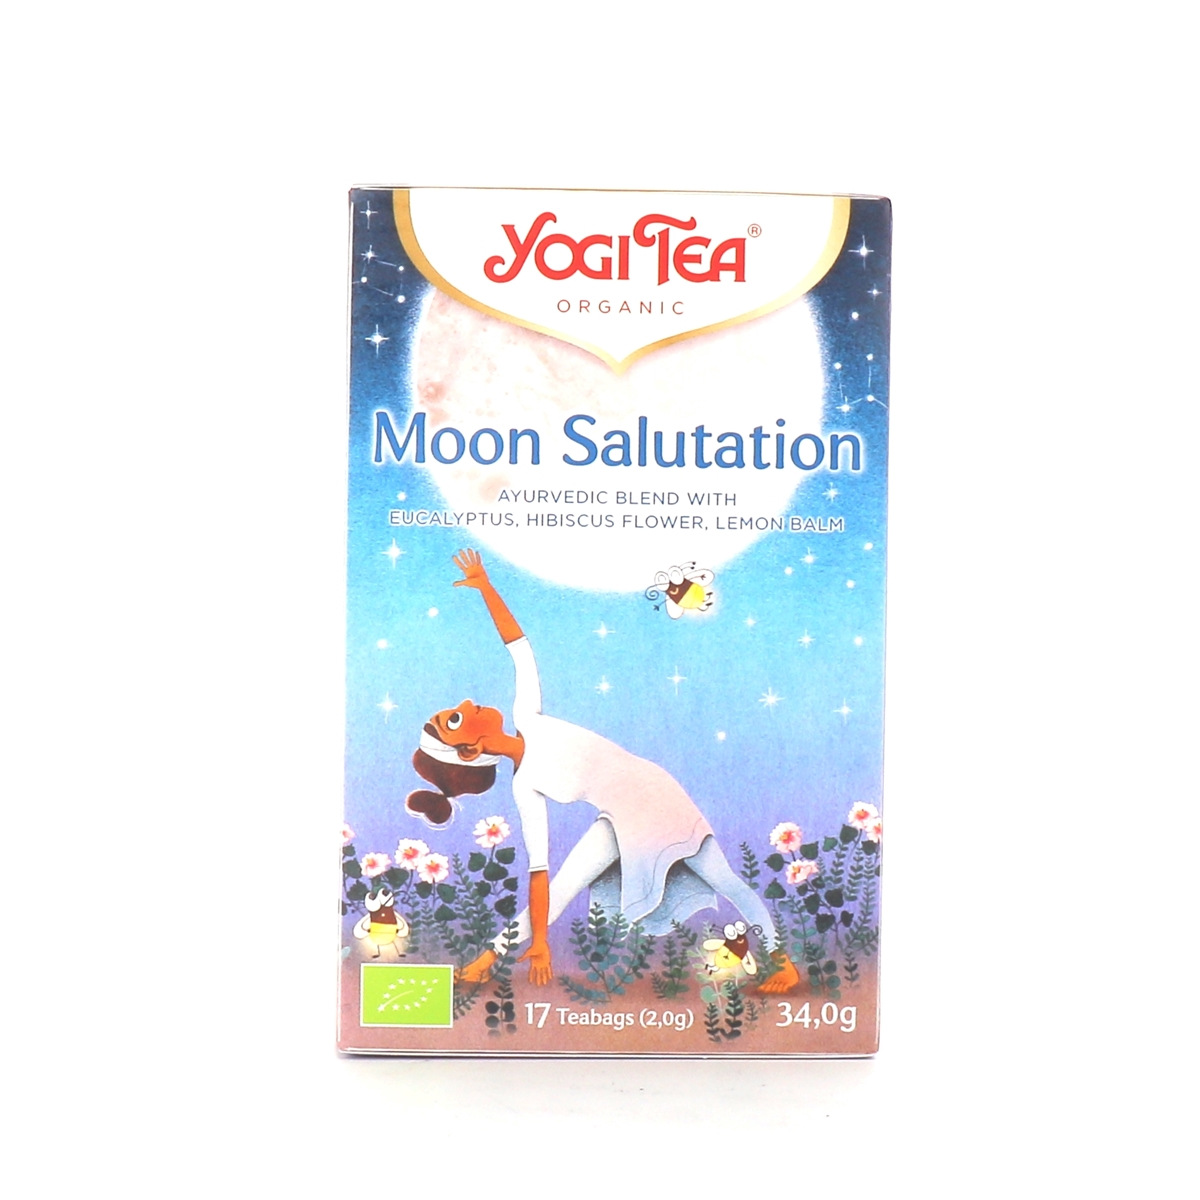 Achetez Yogi Tea Chauffe-cou (17 sachets)